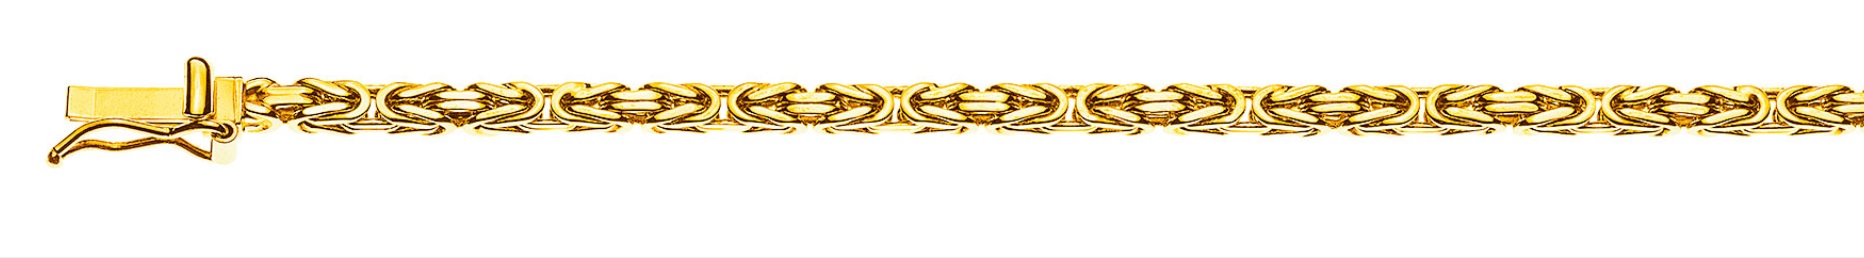 AURONOS Prestige Necklace Yellow Gold 18K King Chain 60cm 2.5mm